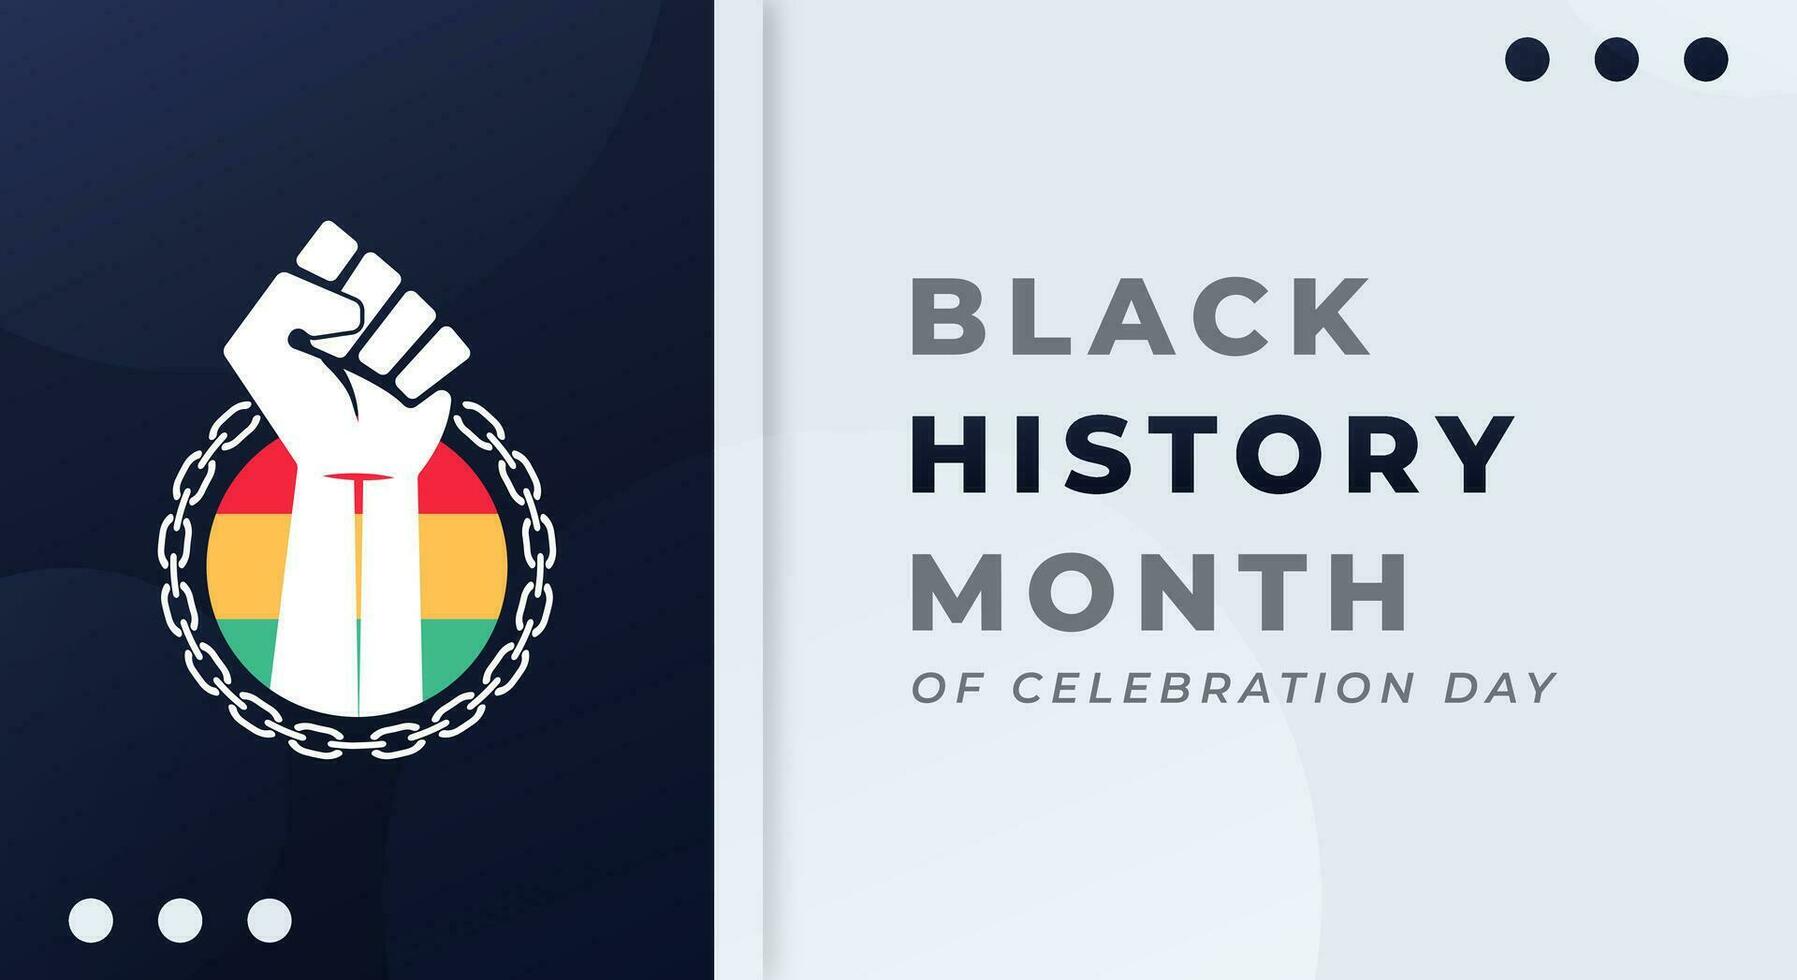 Black History Month Celebration Vector Design Illustration for Background, Poster, Banner, Advertising, Greeting Card